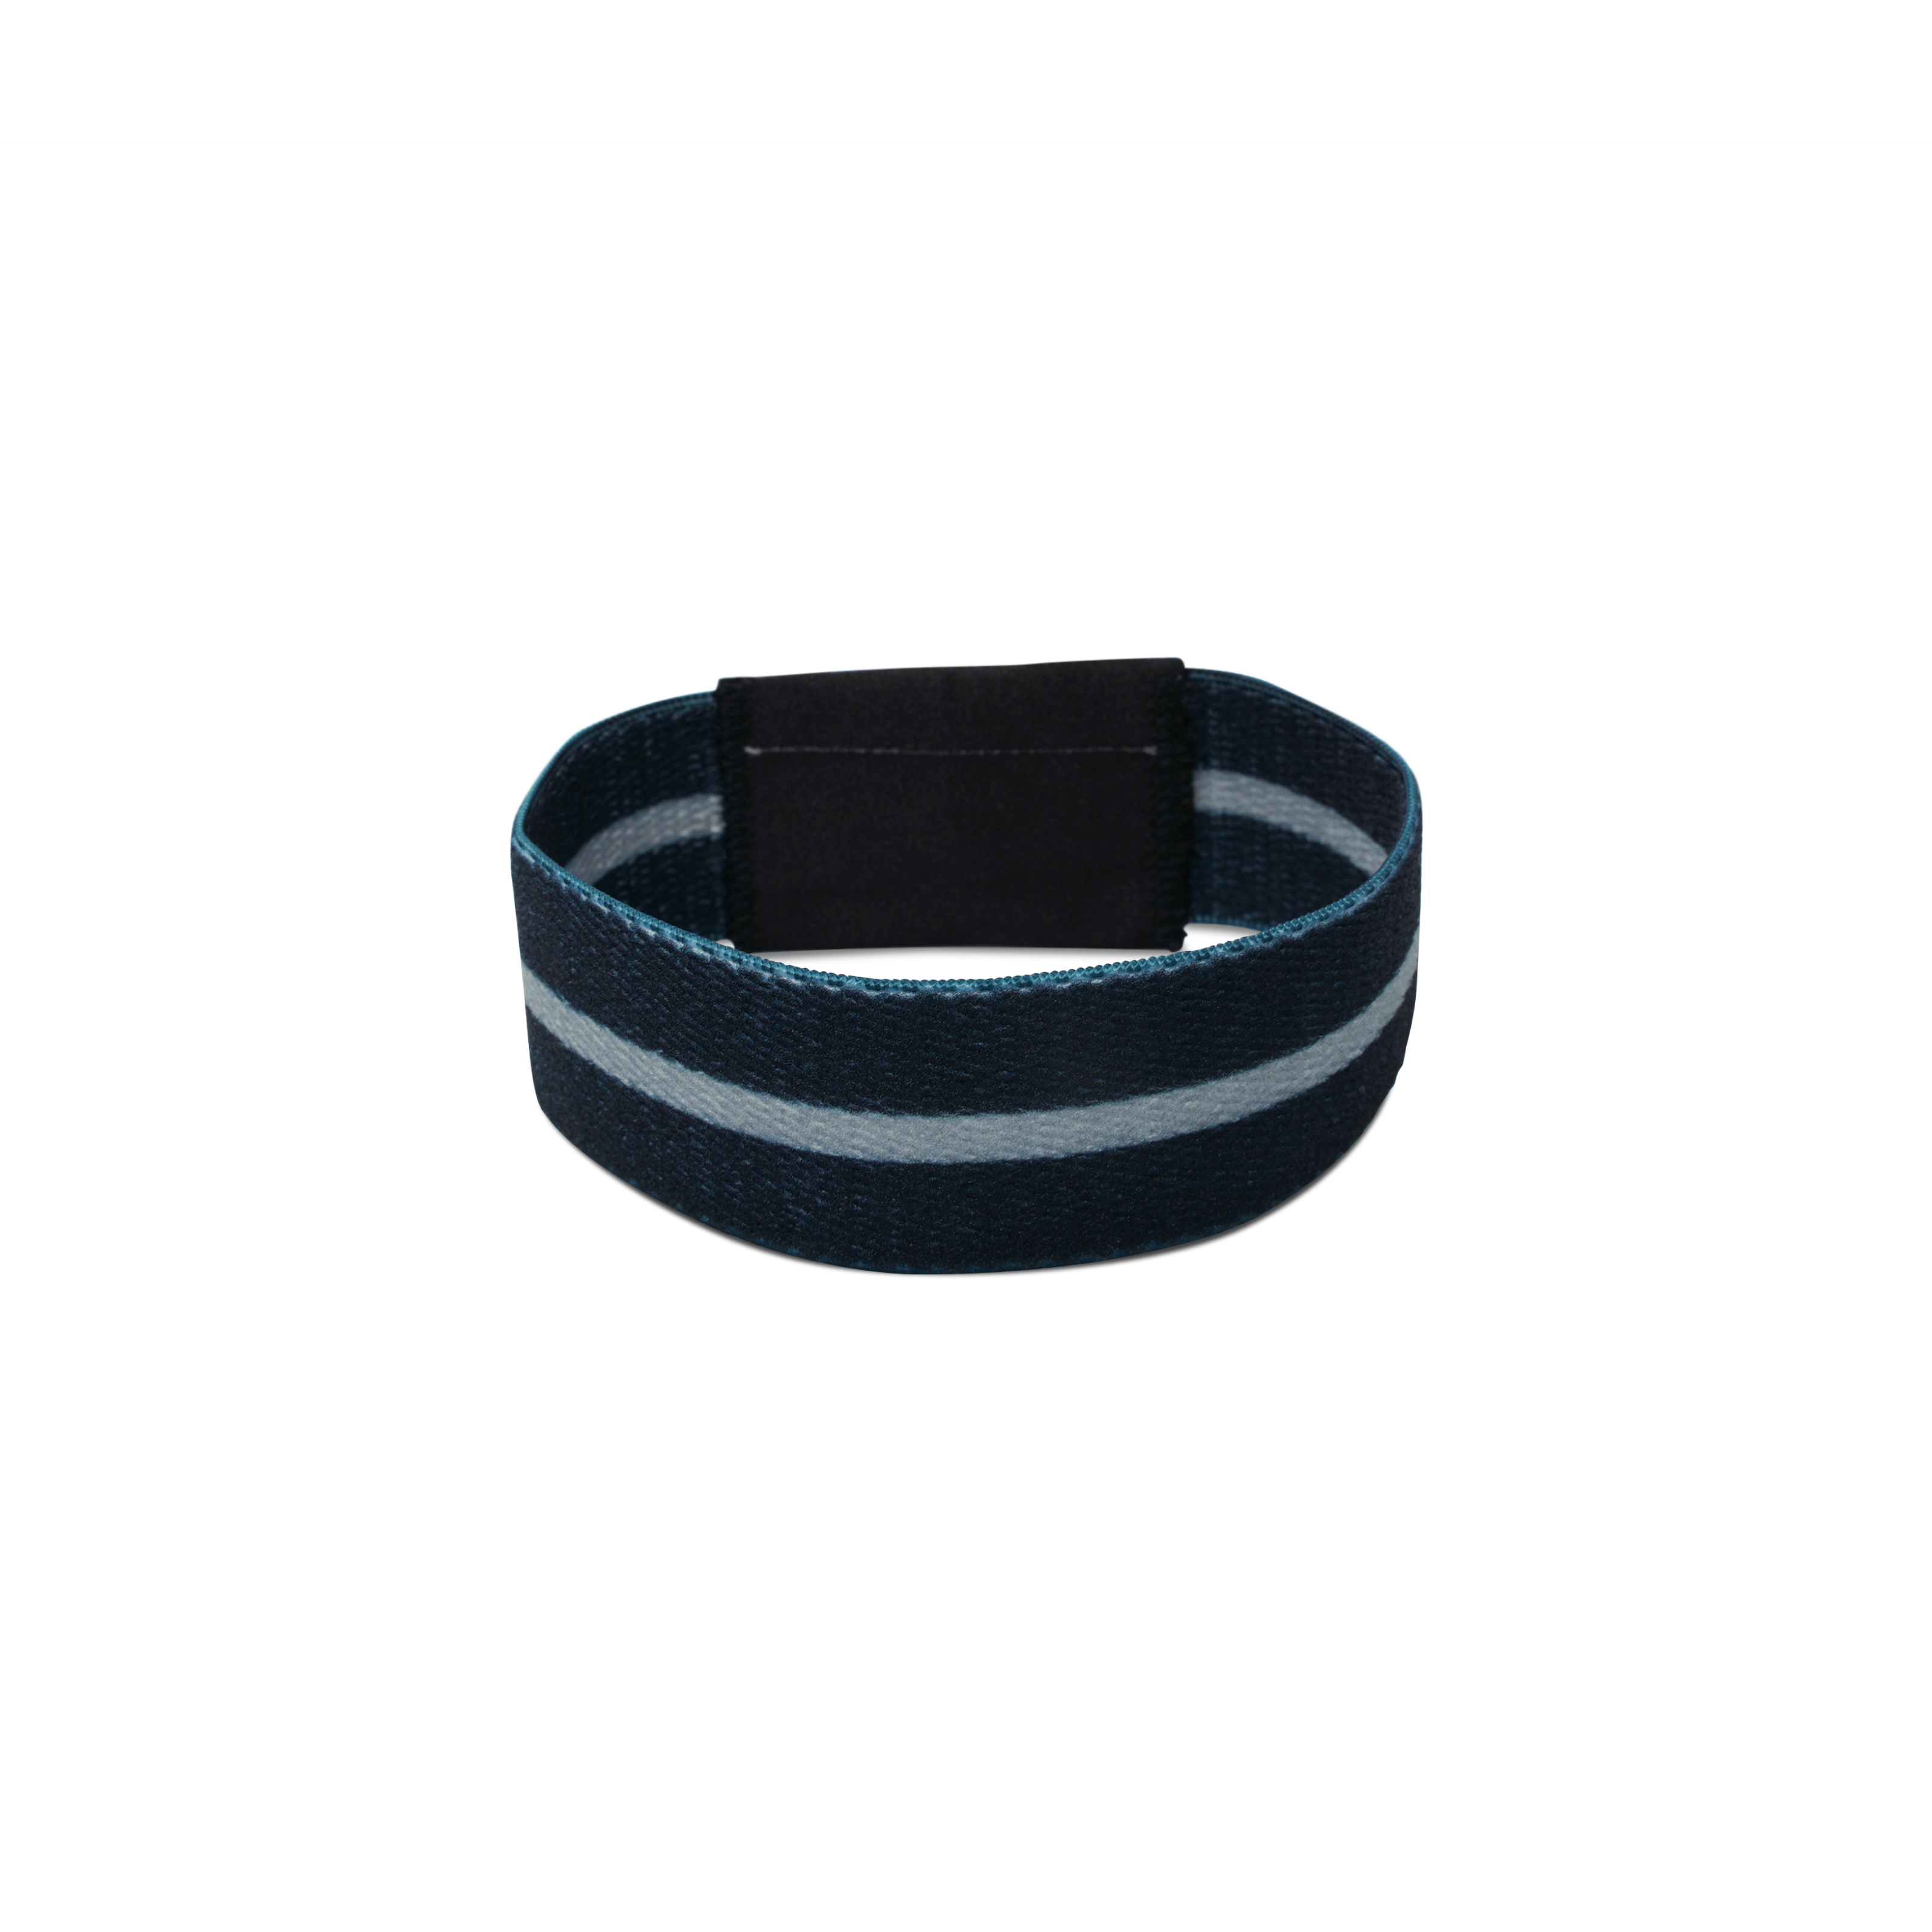 NFC Armband Stoff - 170 x 25 mm - NTAG216 - 924 Byte - anthrazit - Größe S - Durchmesser 54 mm